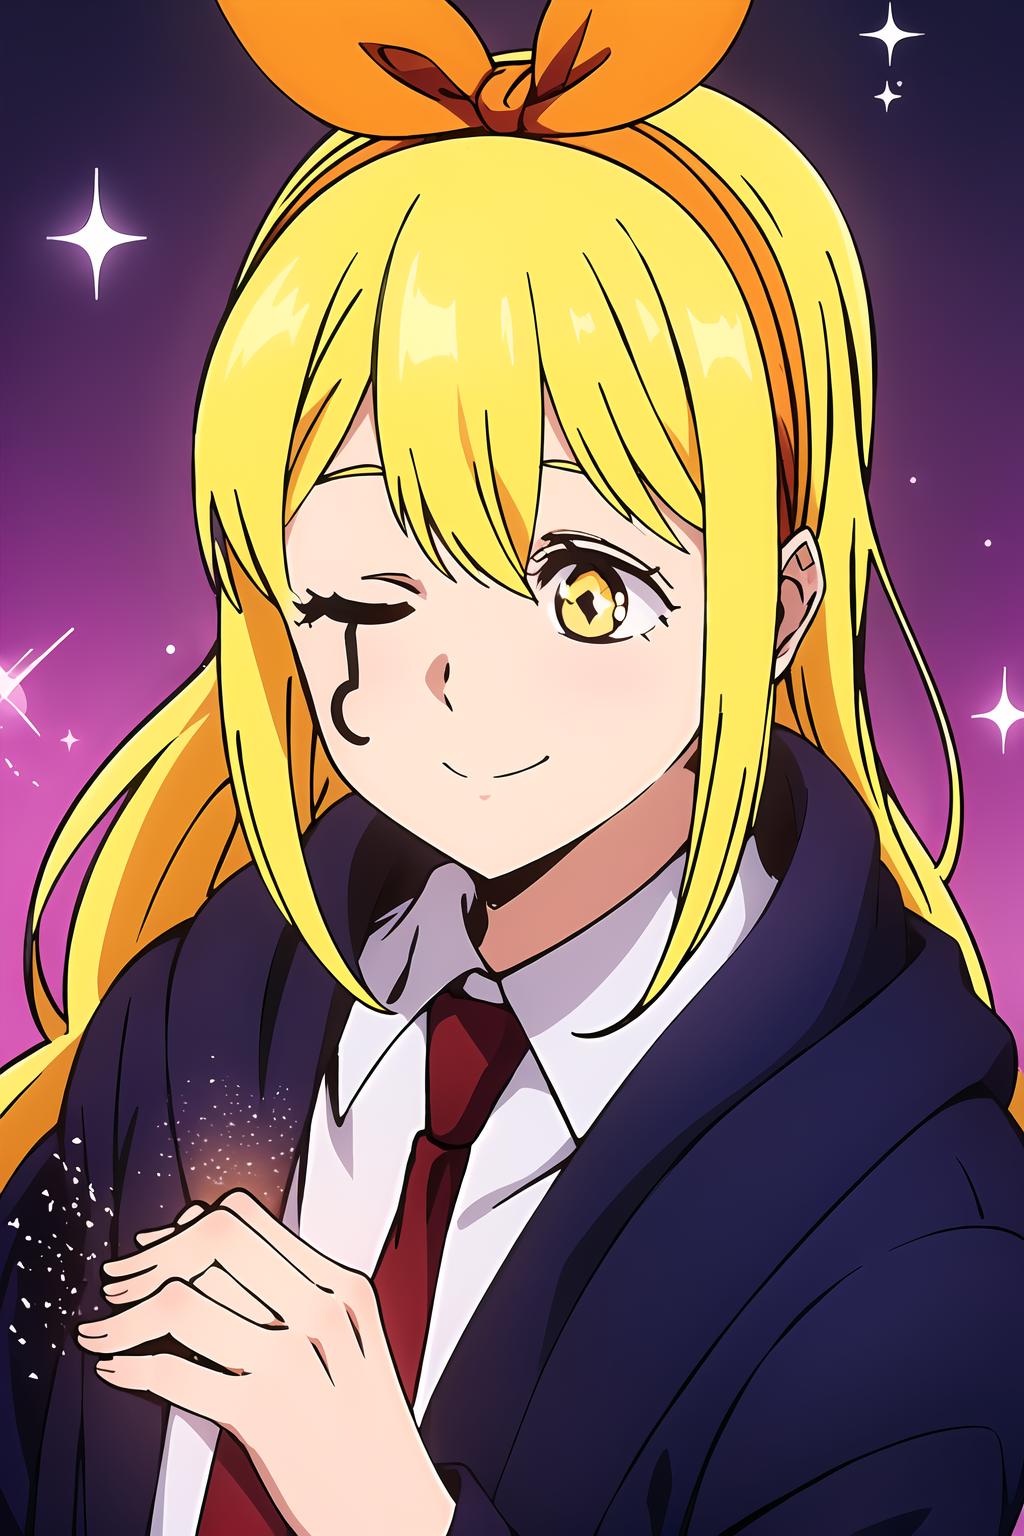 Lemon as an anime character by Dekuplusbakugo on DeviantArt